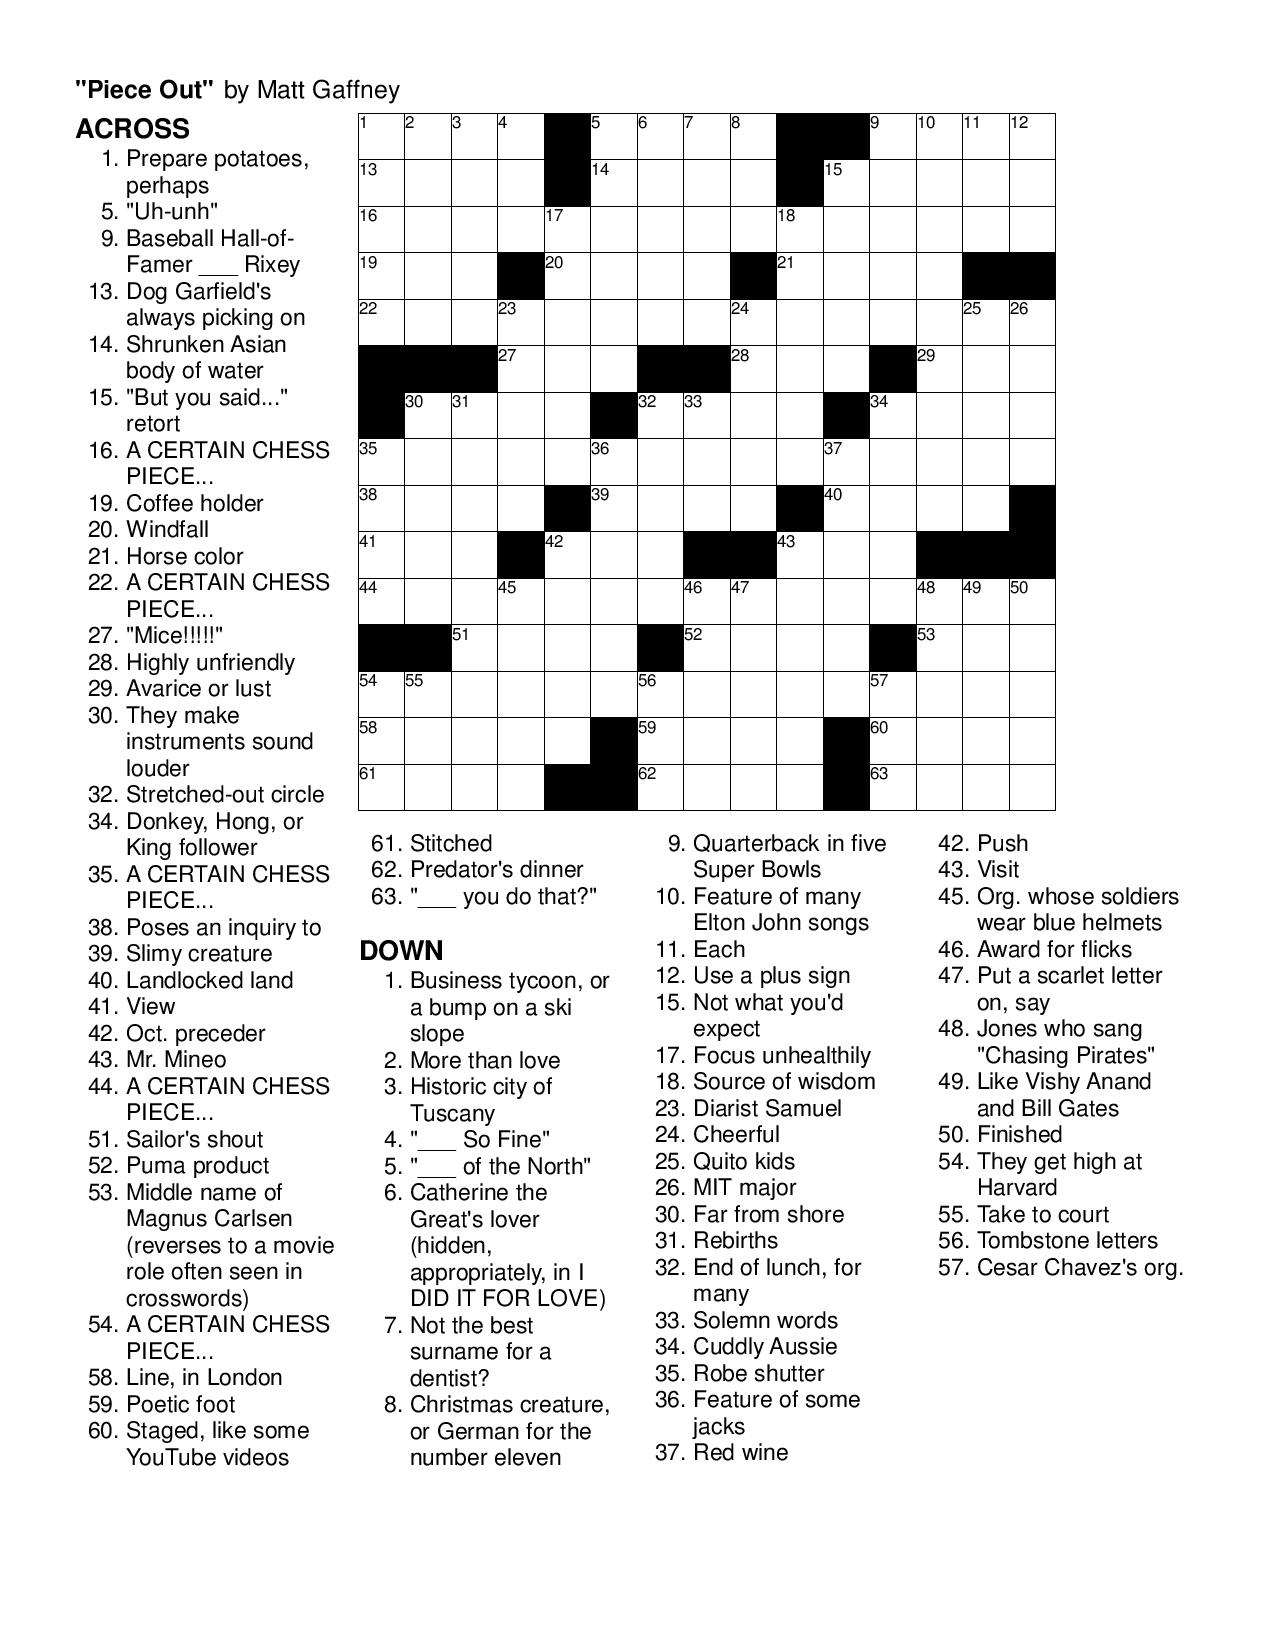 Merl Reagle's Sunday Crossword Free Printable